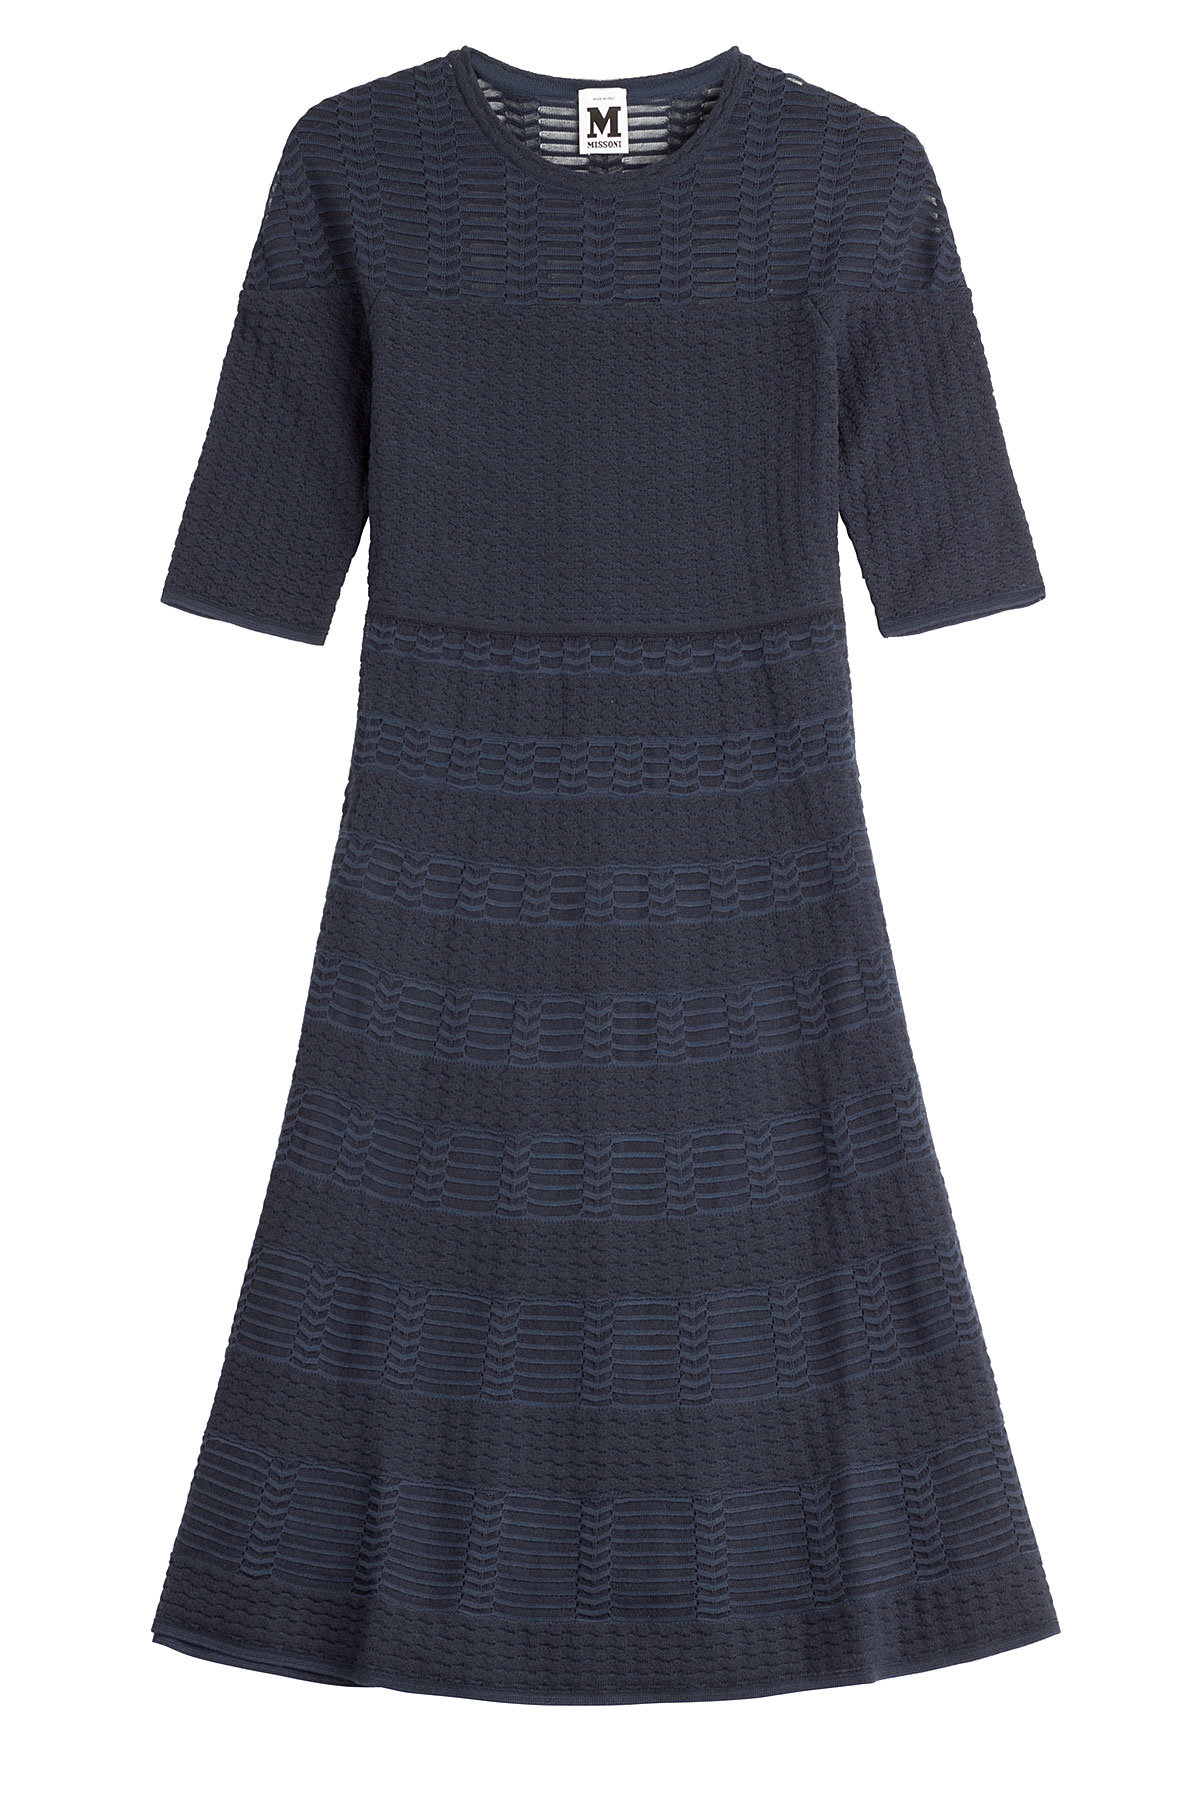 M Missoni - Knitted Dress